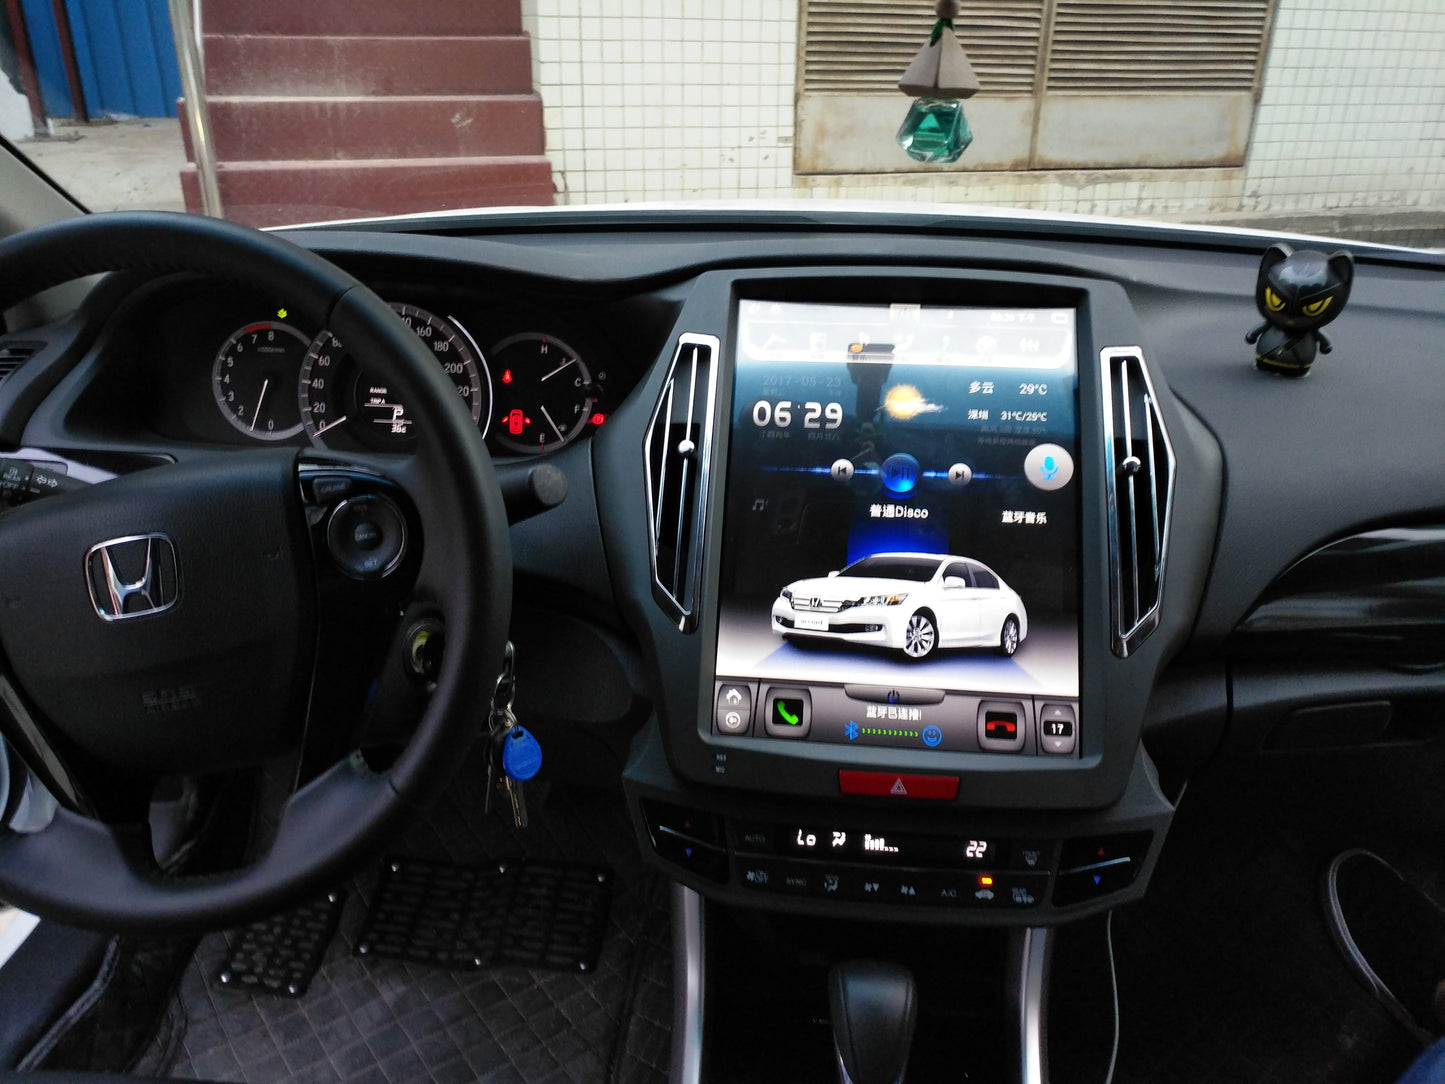 15" Vertical Screen Android Navigation Radio for Honda Accord 2013-2017 - Phoenix Android Radios